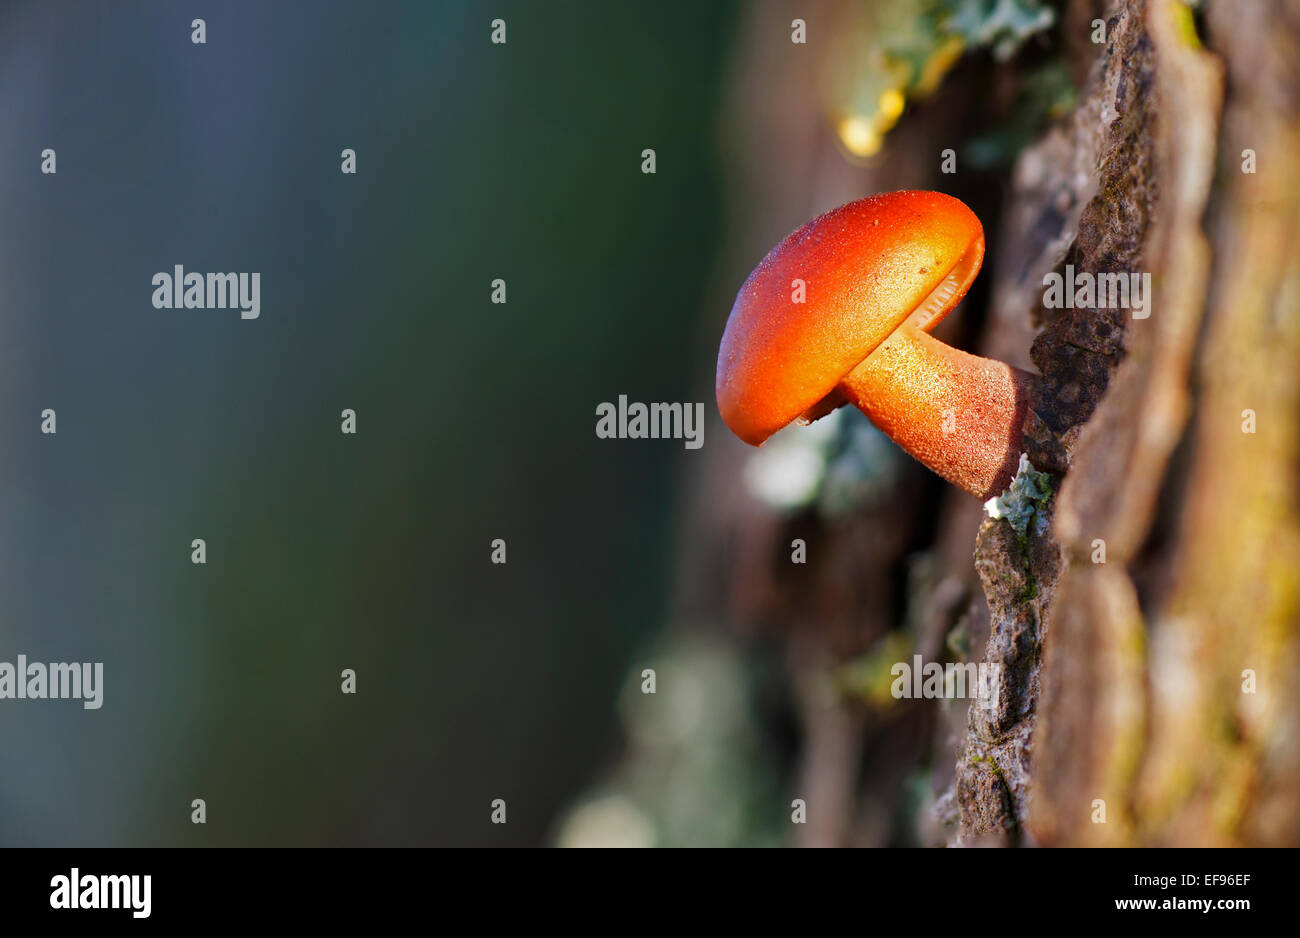 Lone  red  wax-cap Hygrophorus sp. mushroom on tree bark  a typical fungi found in British Woodland Stock Photo